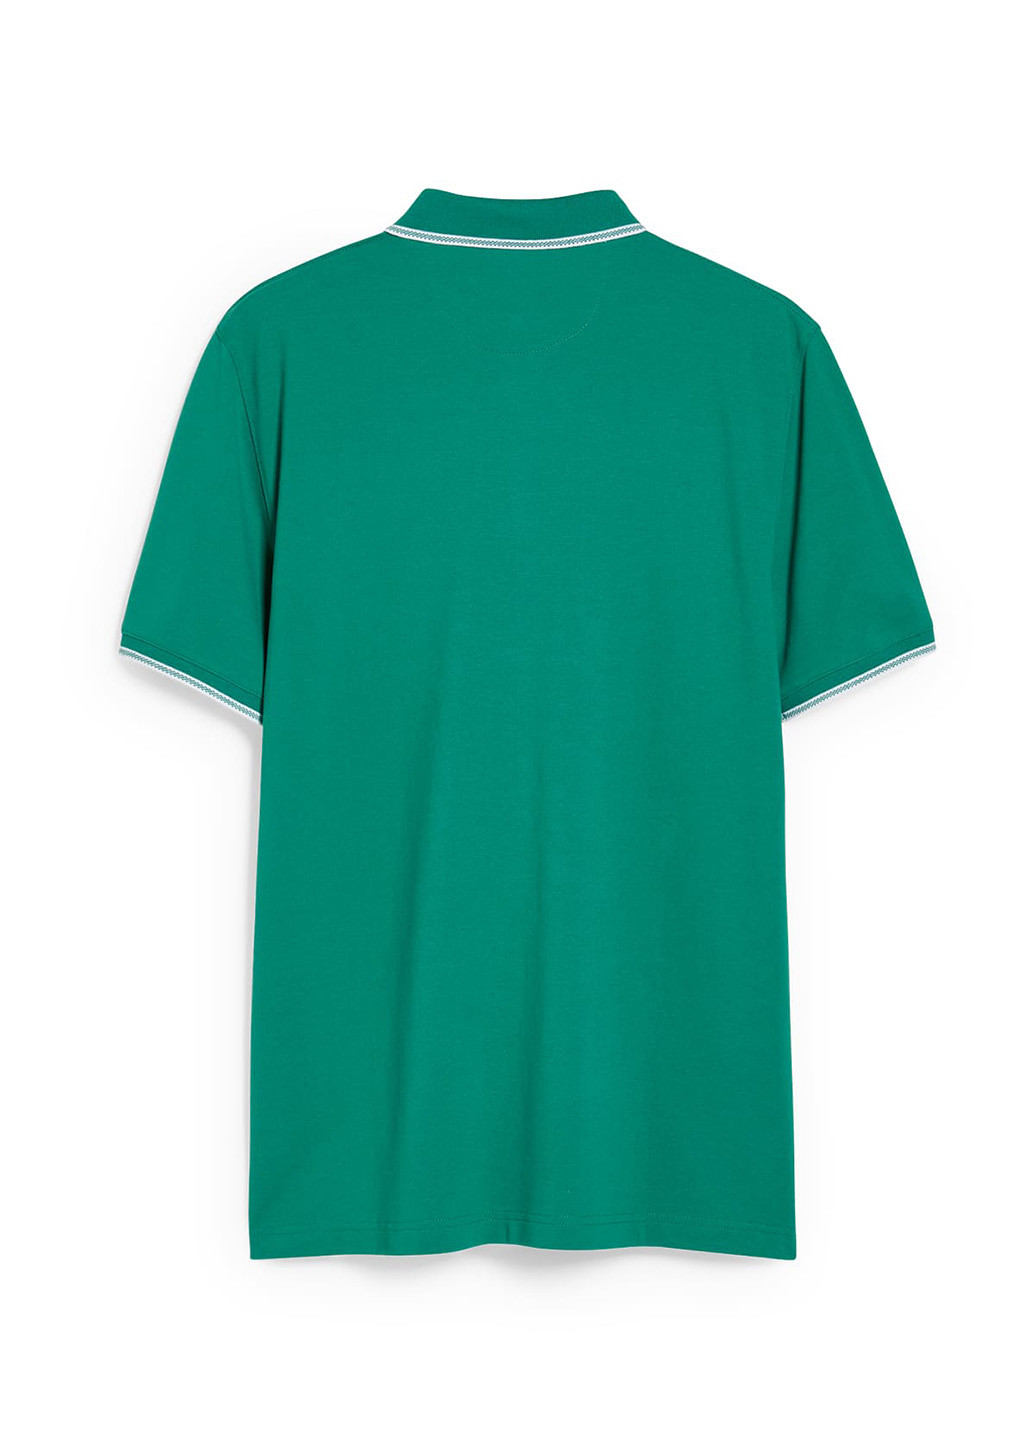 Зеленая футболка-поло для мужчин C&A однотонная